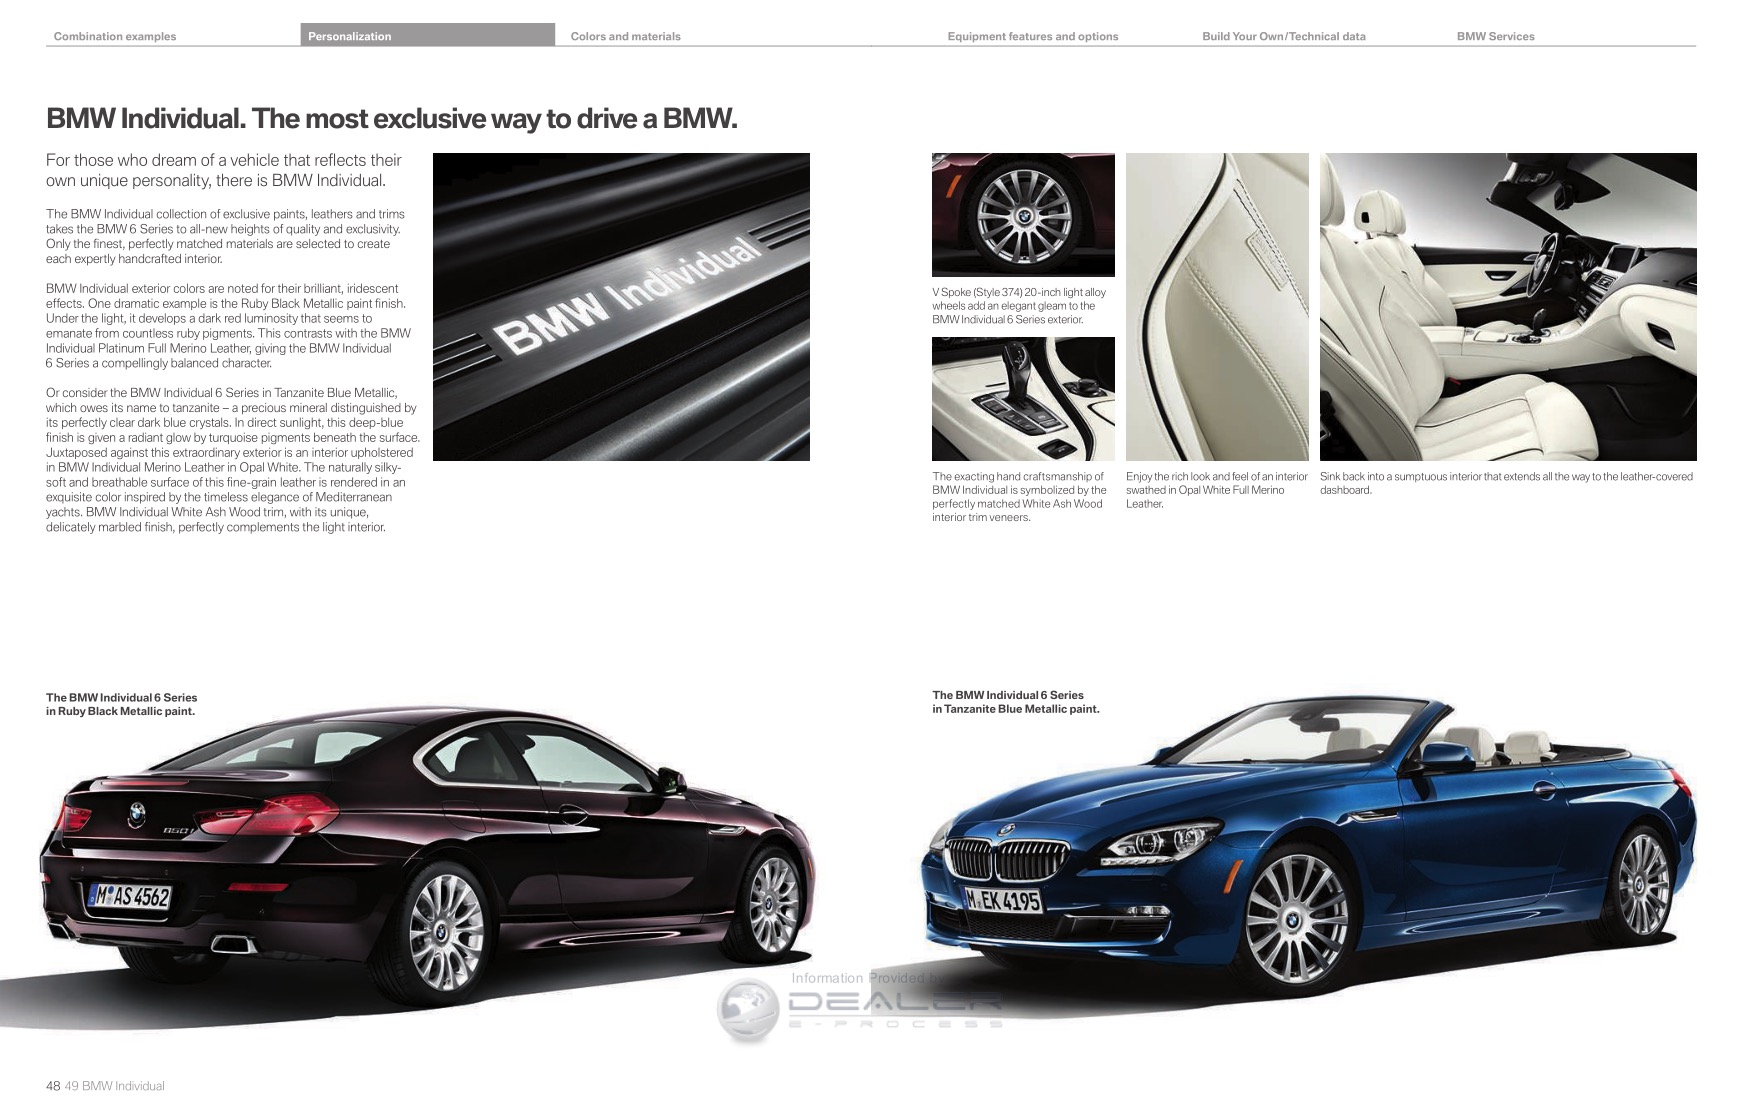 2012 BMW 6-Series Brochure Page 30